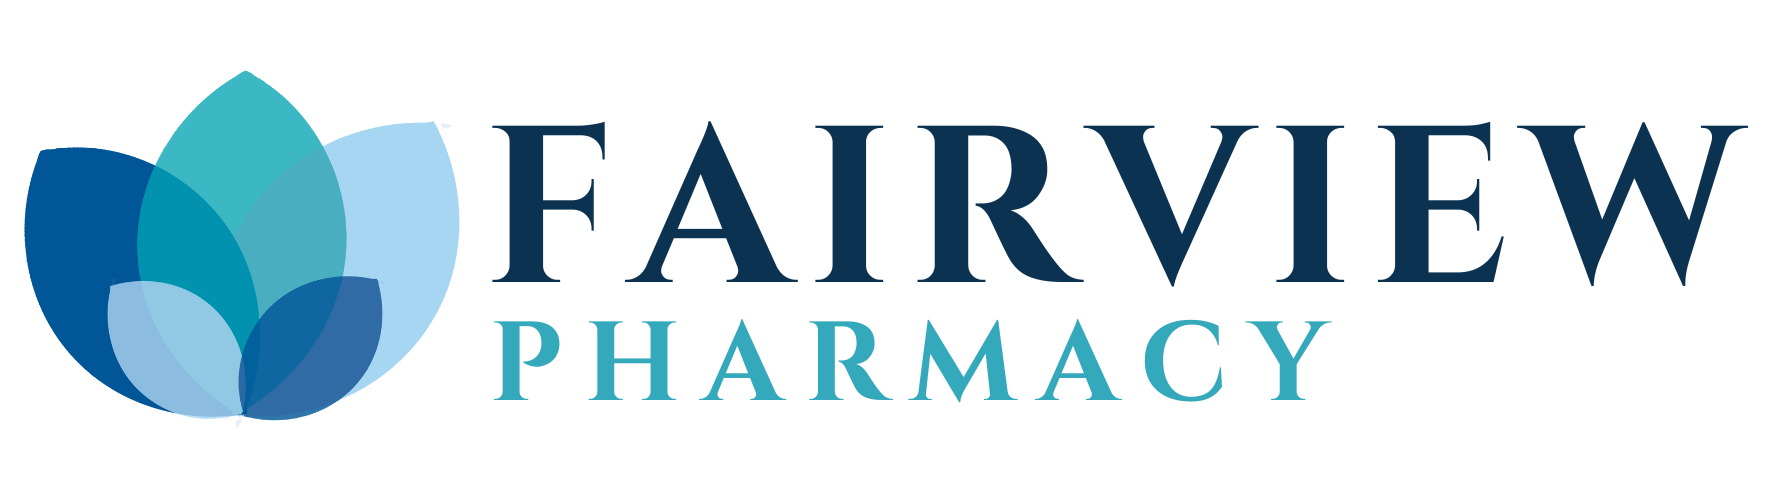 Fairview Pharmacy